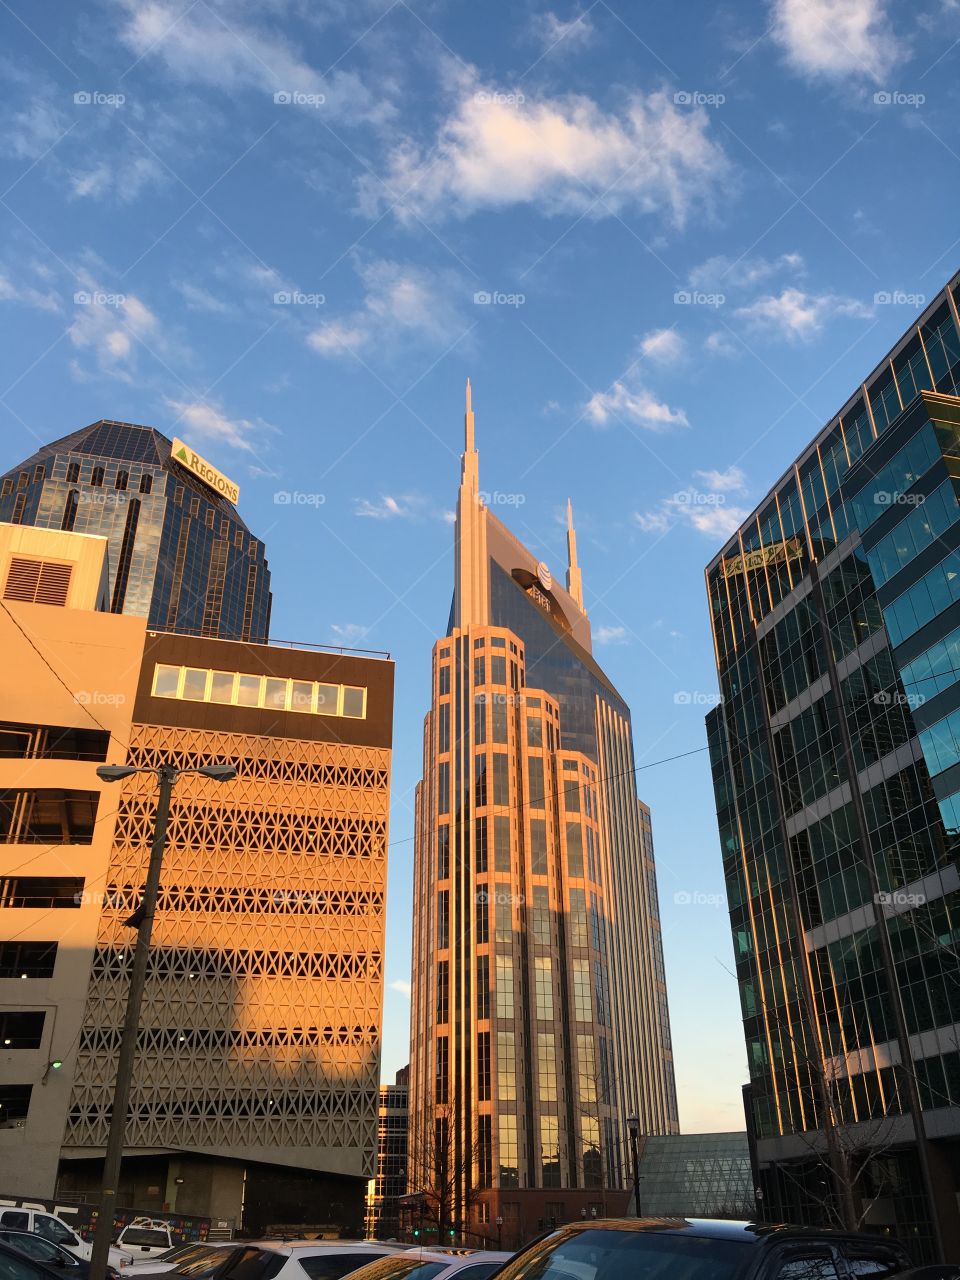 The "Batman Building," Nashville, TN